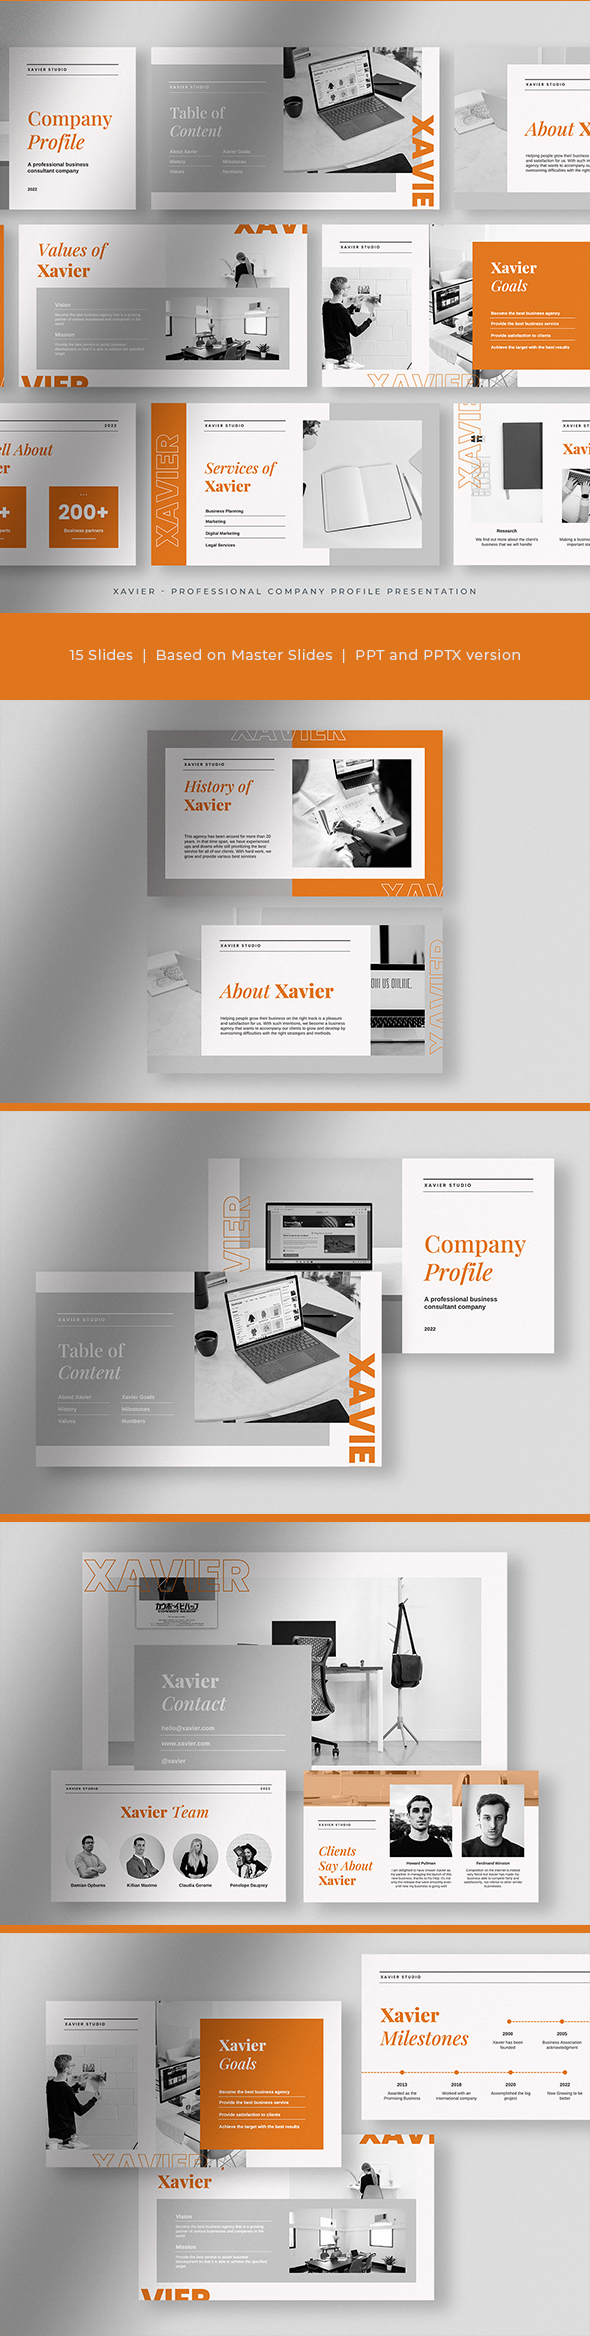 Xavier - Professional Company Profile Presentation